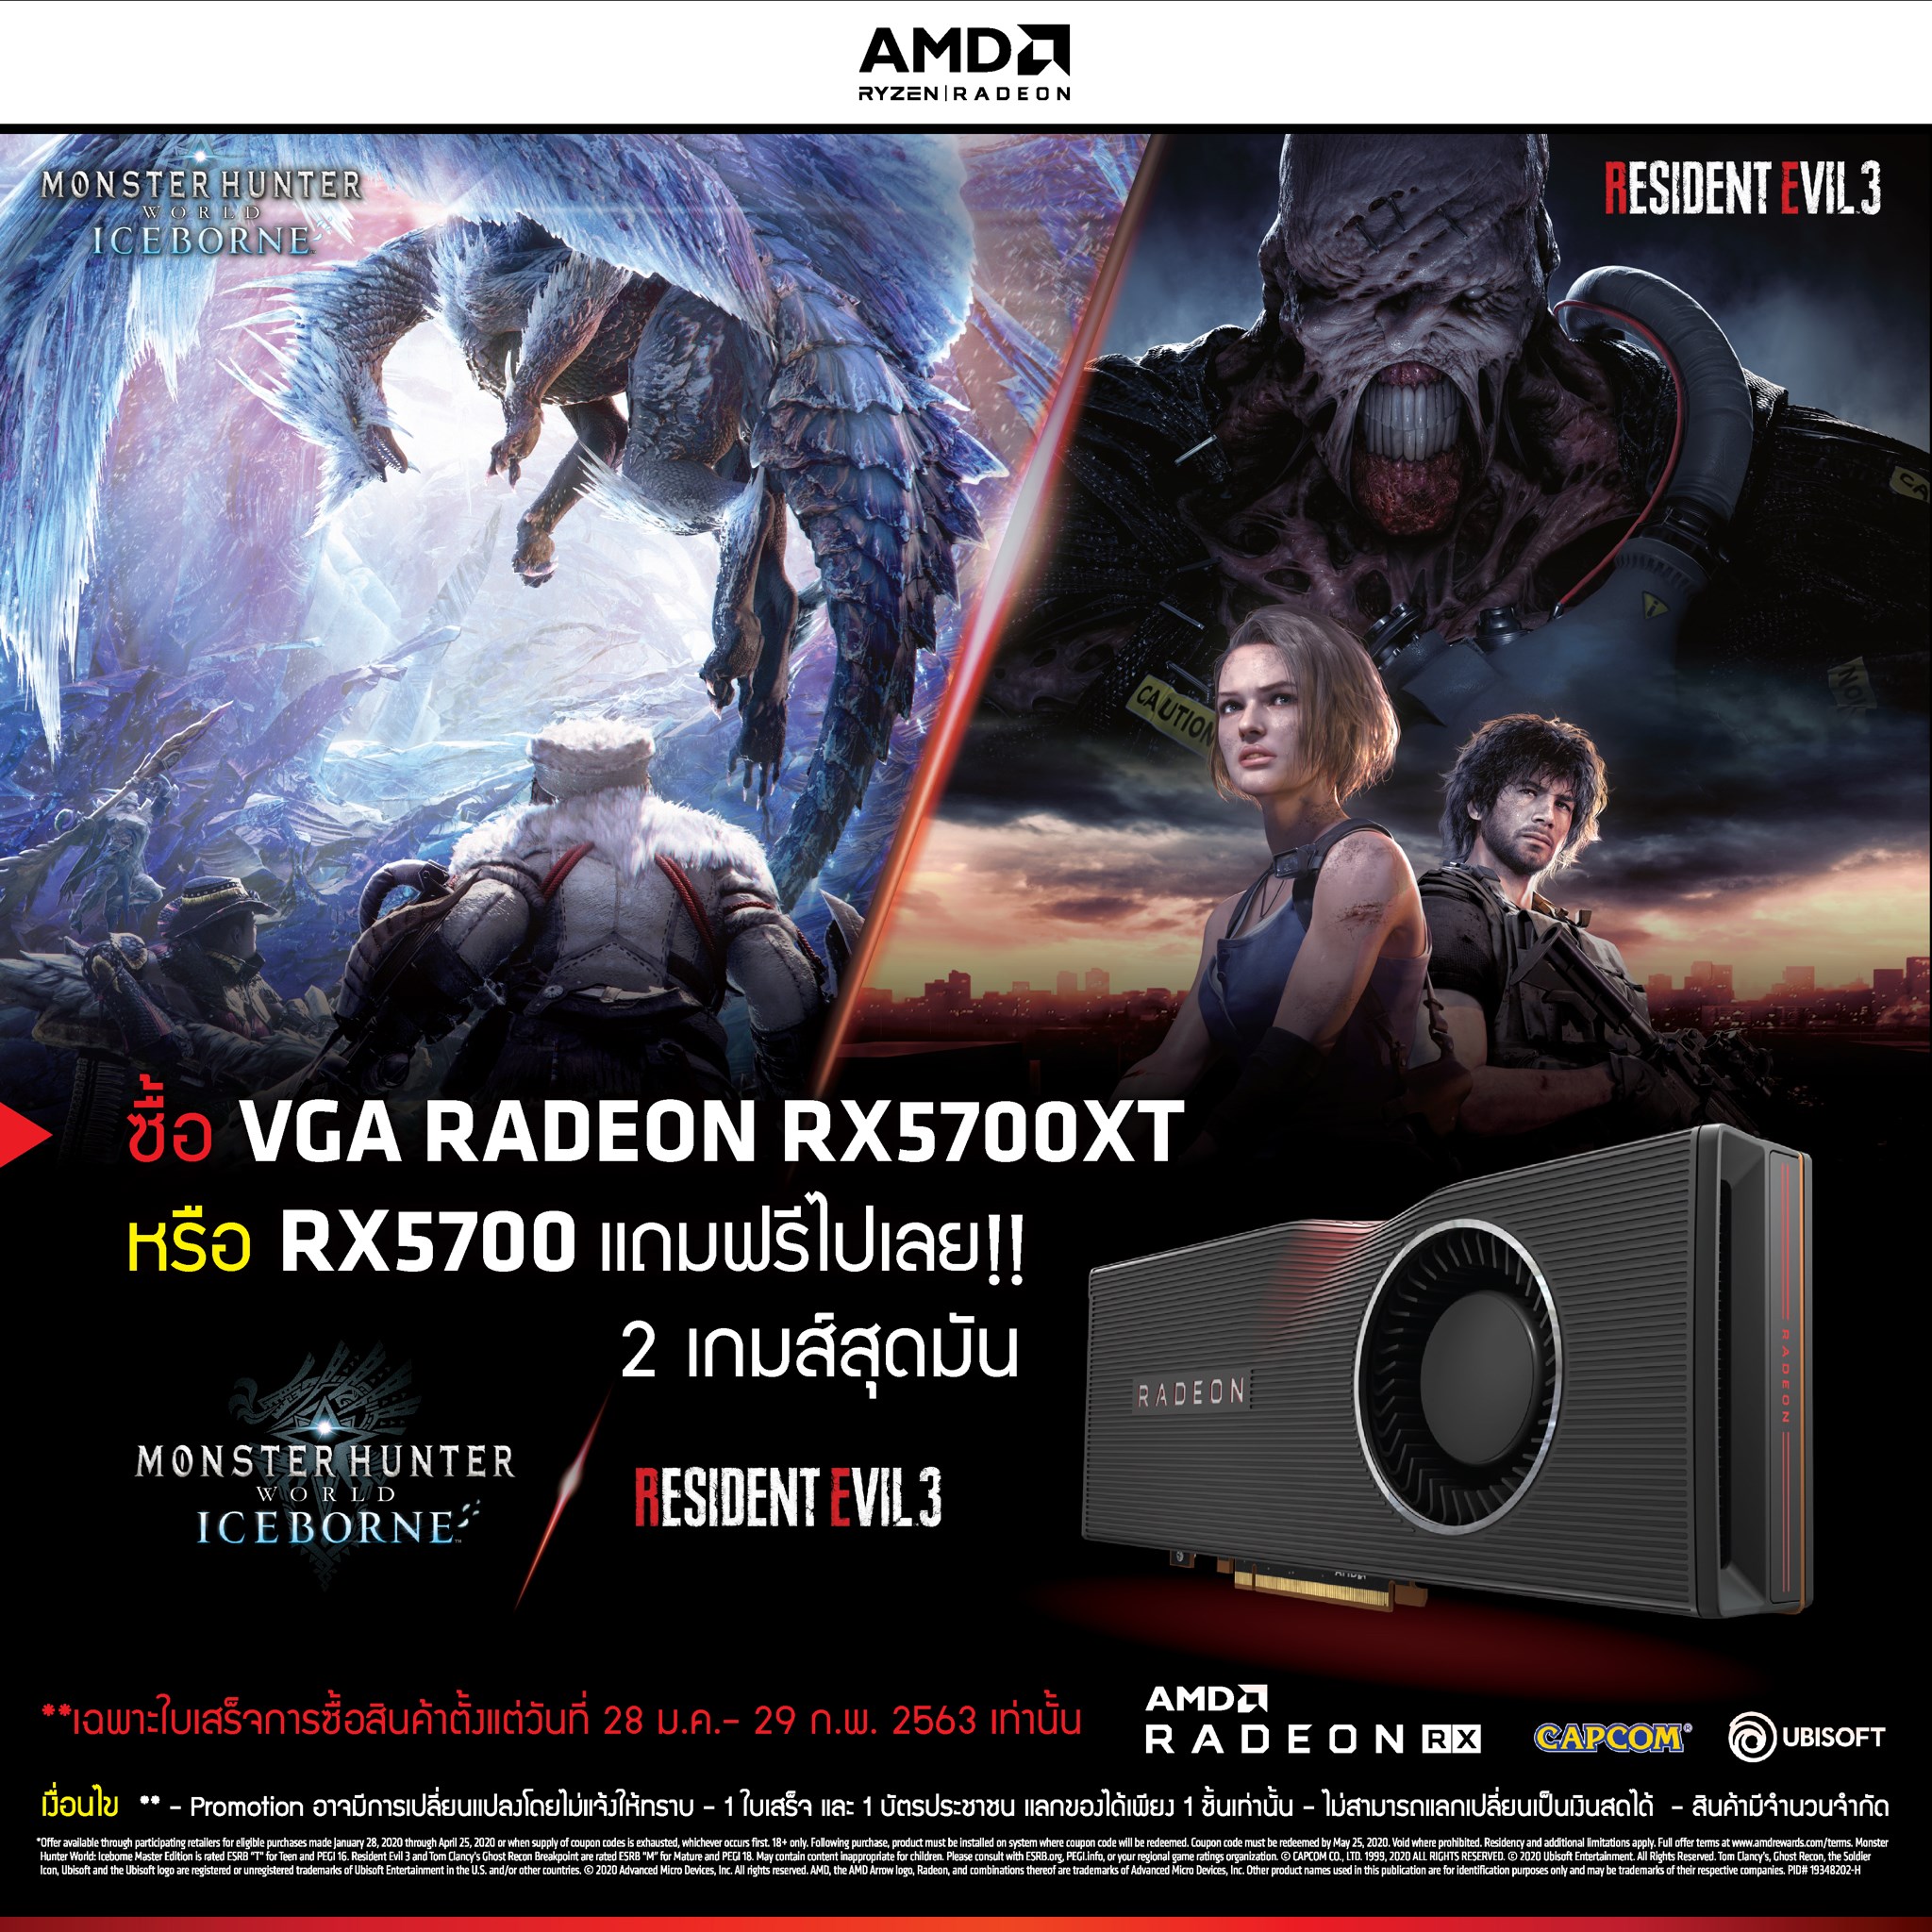 promotion 41 AMD มีโปรโมชั่นสำหรับ End user ที่ซื้อการ์ดจอที่ร่วมรายการ RX5500XT และ RX5700XT   RX 5700 ภายในวันที่ 1 กุมภาพันธ์   29 กุมภาพันธ์เป็นต้นไป แลกรับเกมสูงสุดถึง 3 เกมส์ อาทิเช่น Ghost recon breakpoint , Monster Hunter world   Icebone   Resident Evil 3